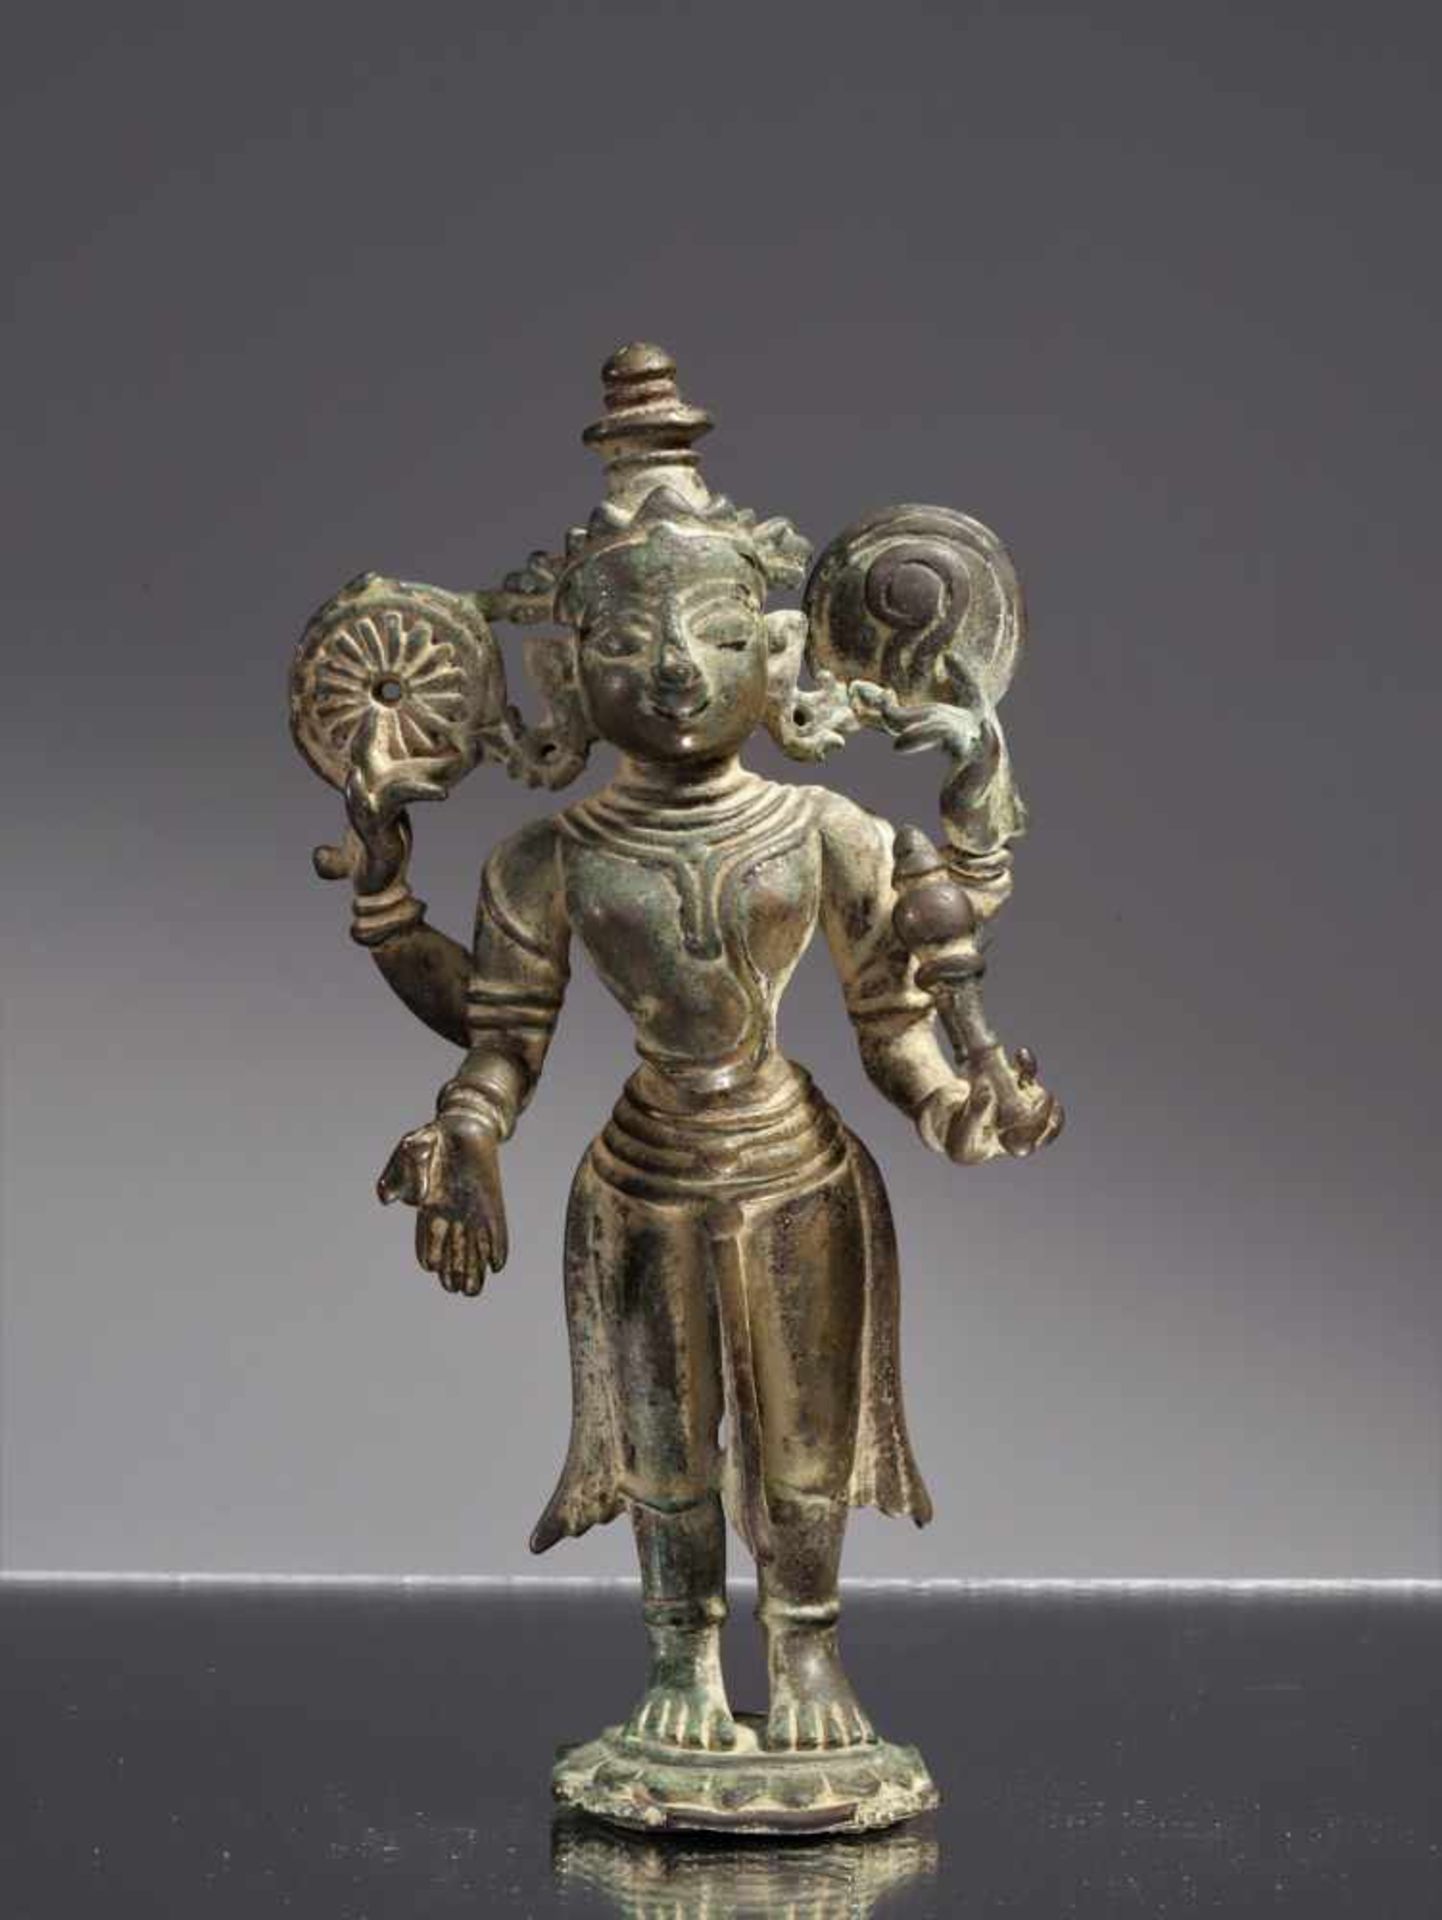 VISHNUBronzeIndia , 10th centuryDimensions: Height 14 cm ; Wide 8 cm ; Depth 3 cmWeight: 404